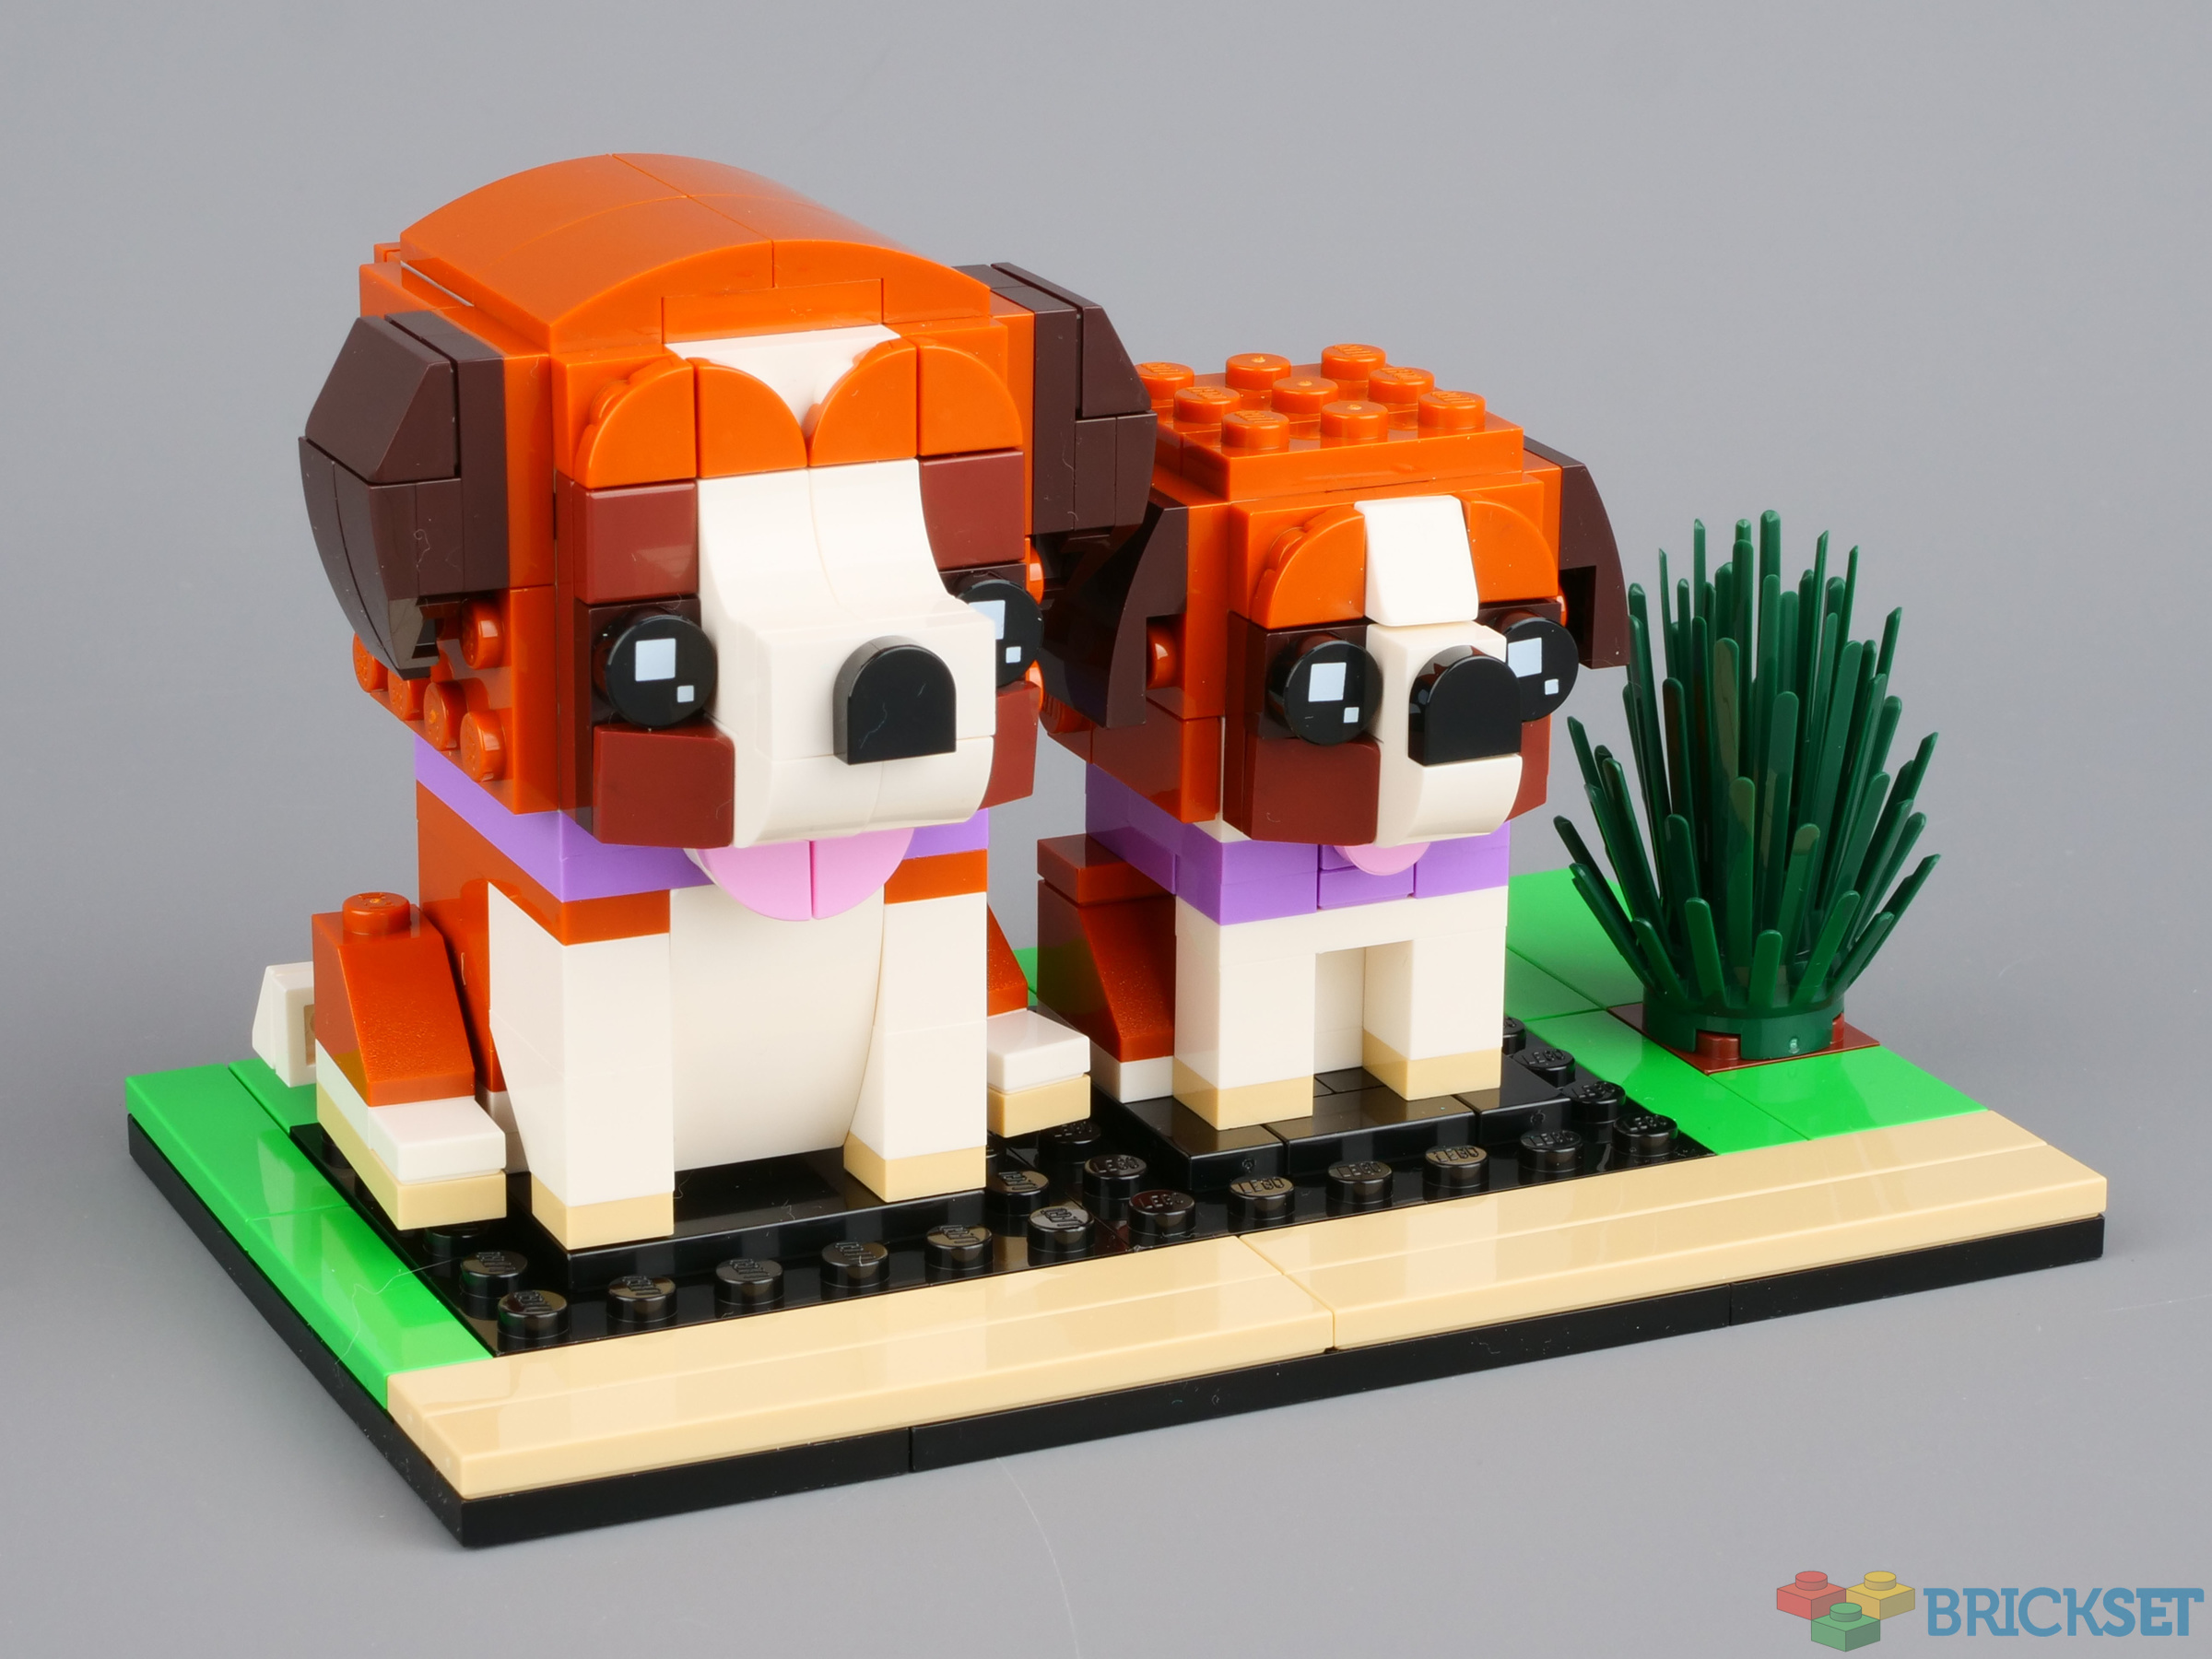 LEGO BrickHeadz Pets